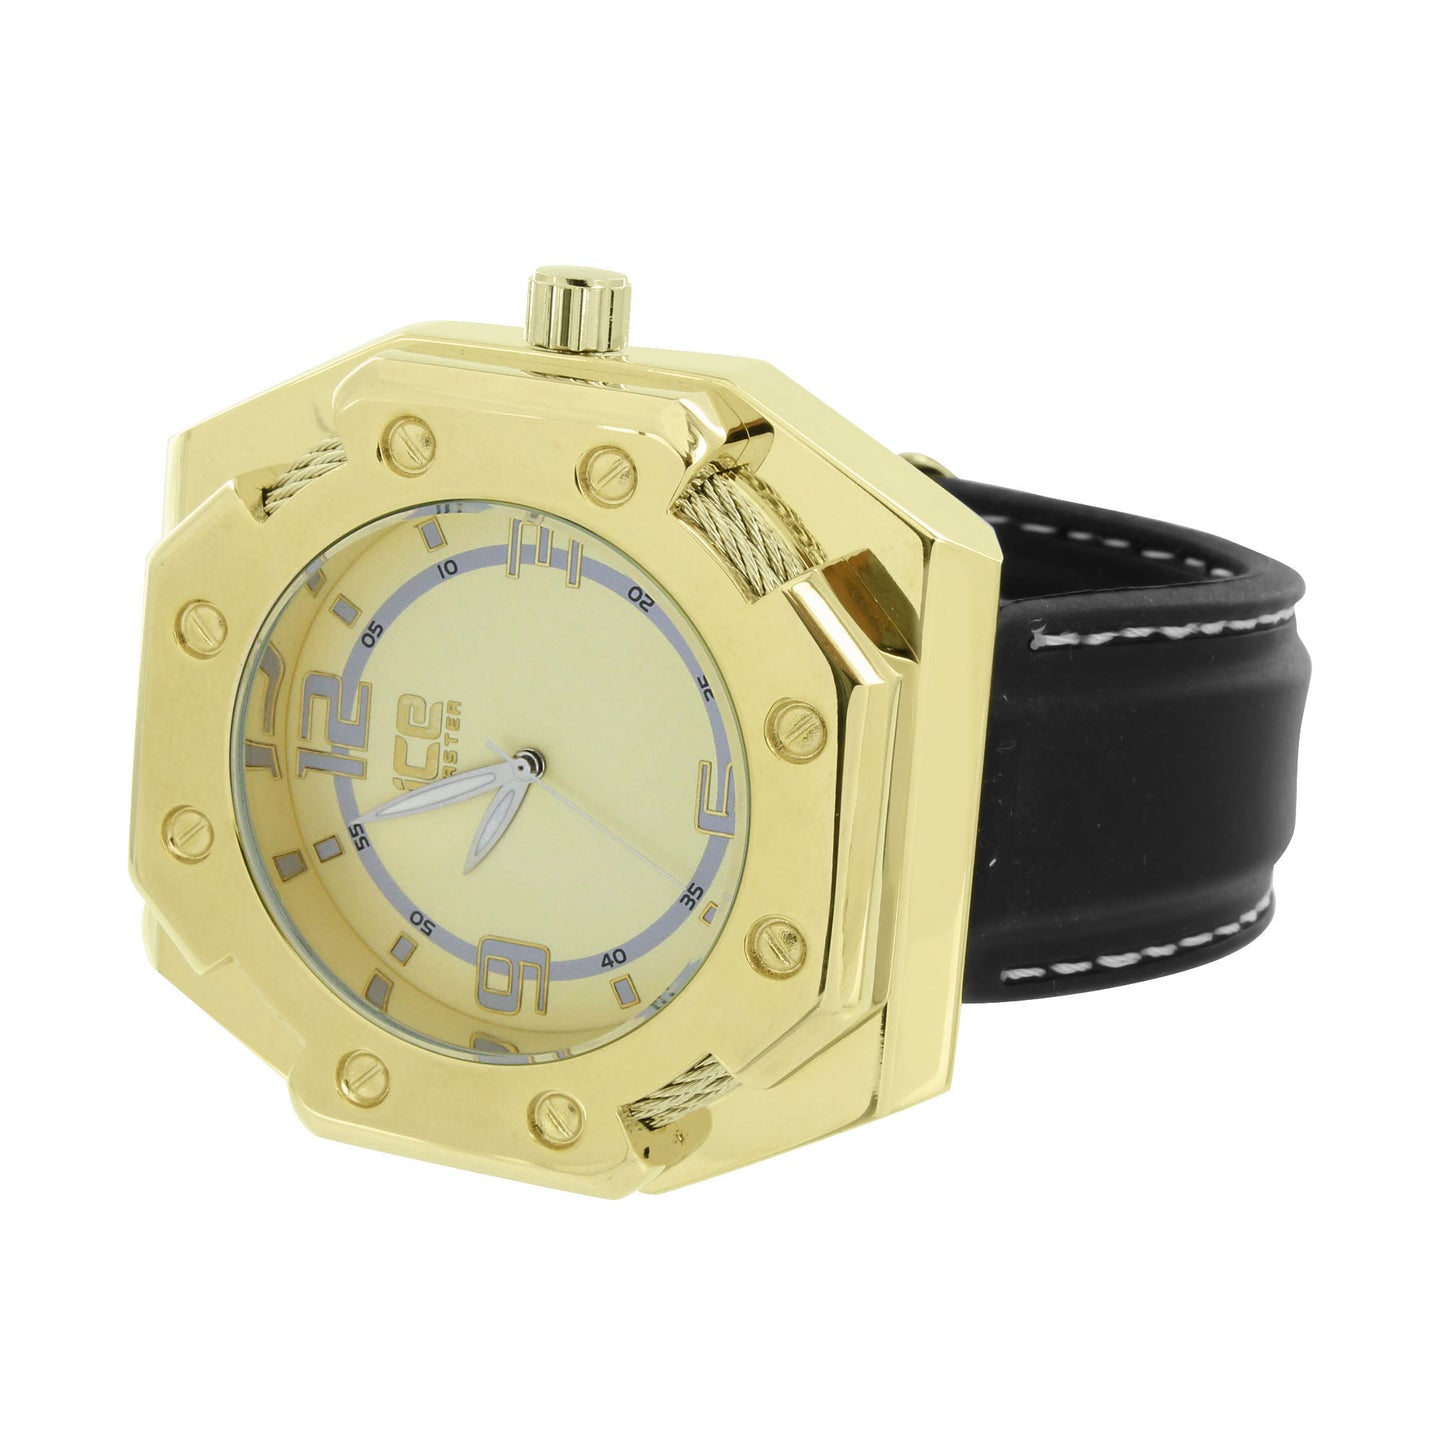 Mens Gold Finish Watch XL Bezel Screw Design Black Leather Strap 55 MM Case New